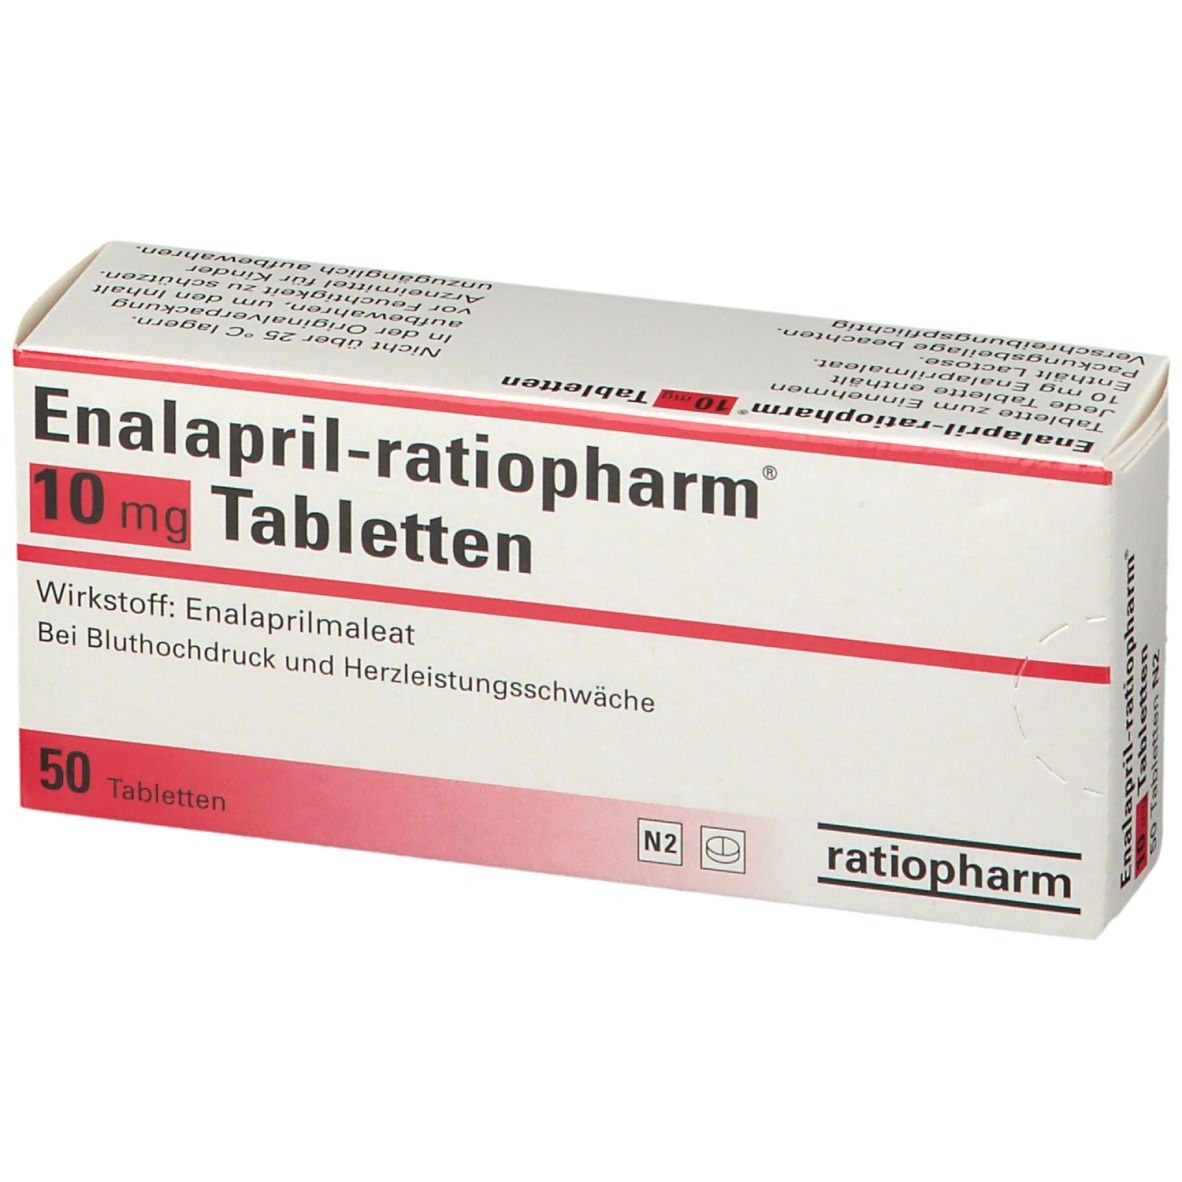 Enalapril-ratiopharm® 10 mg